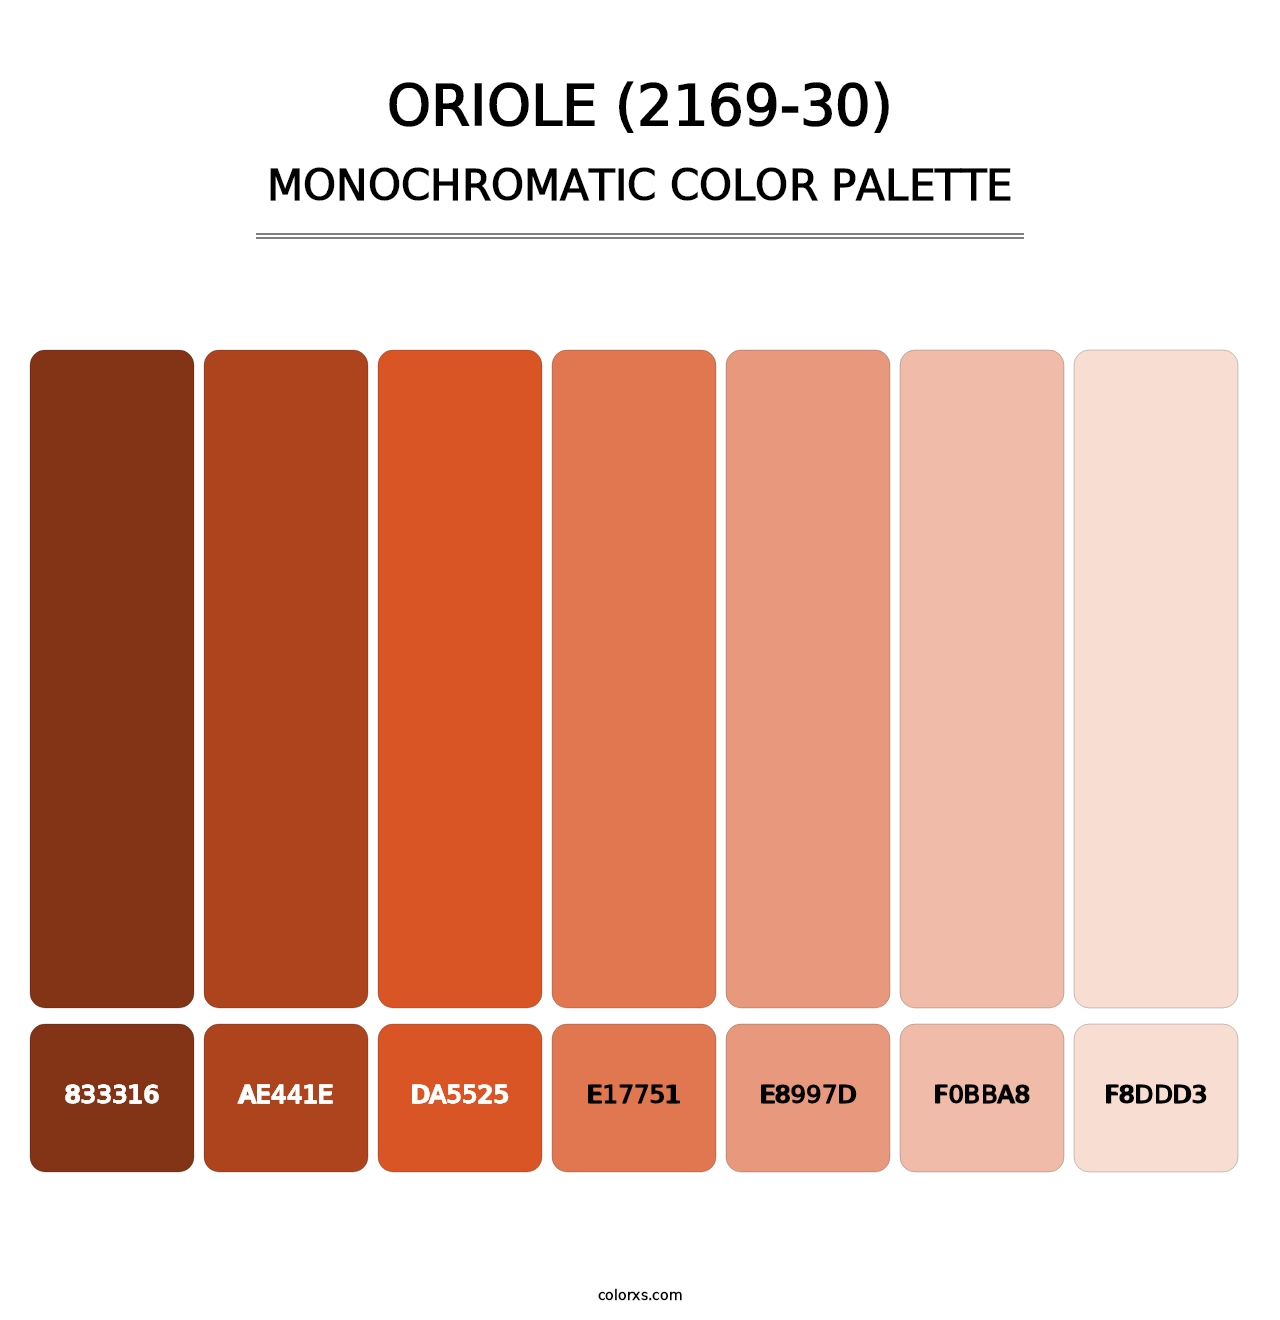 Oriole (2169-30) - Monochromatic Color Palette